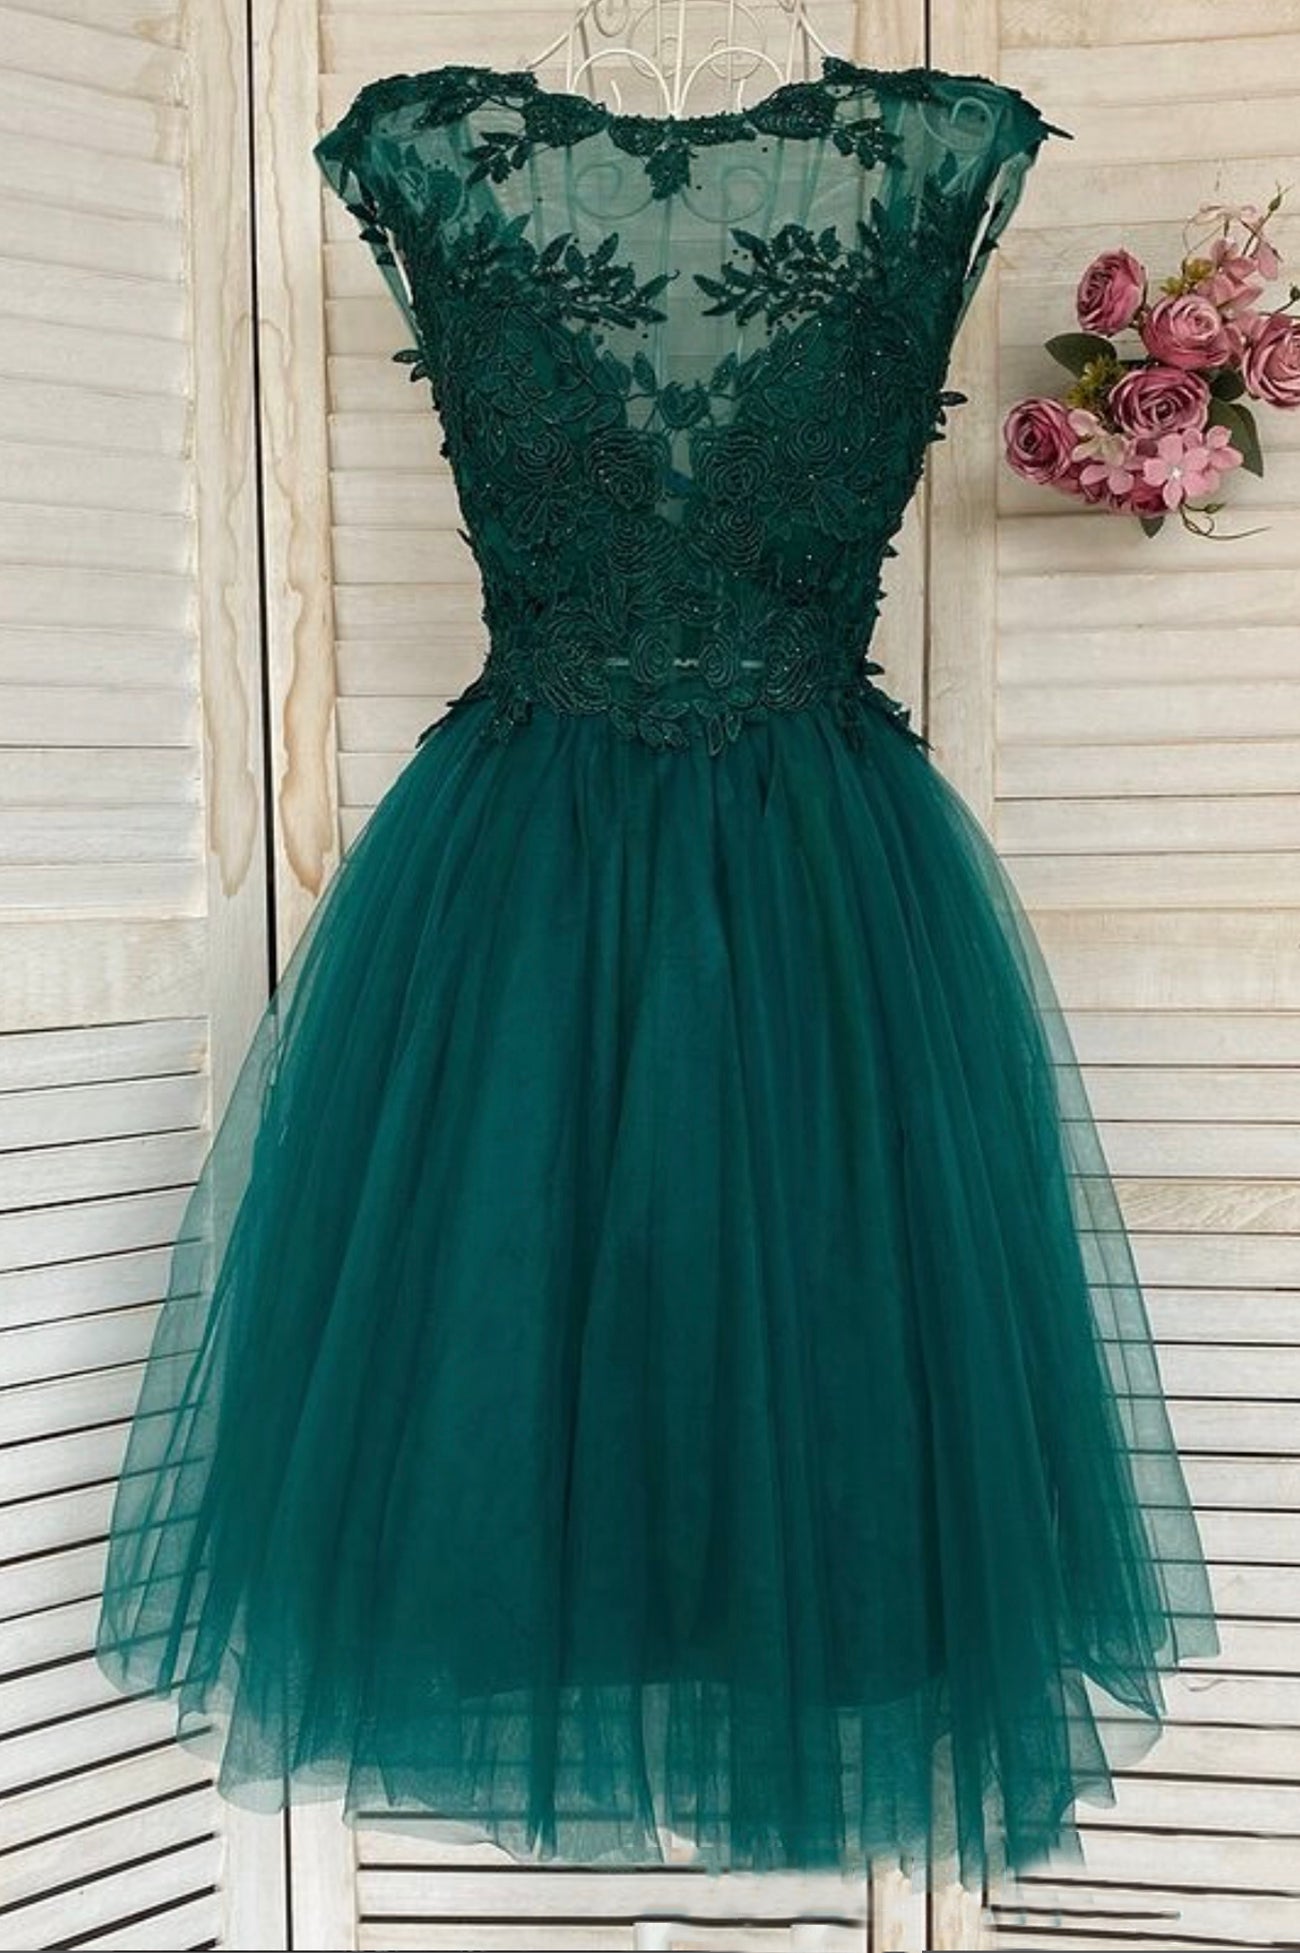 Winter Formal Dress Short, Green Lace Short Prom Dress, A-Line Homecoming Dress